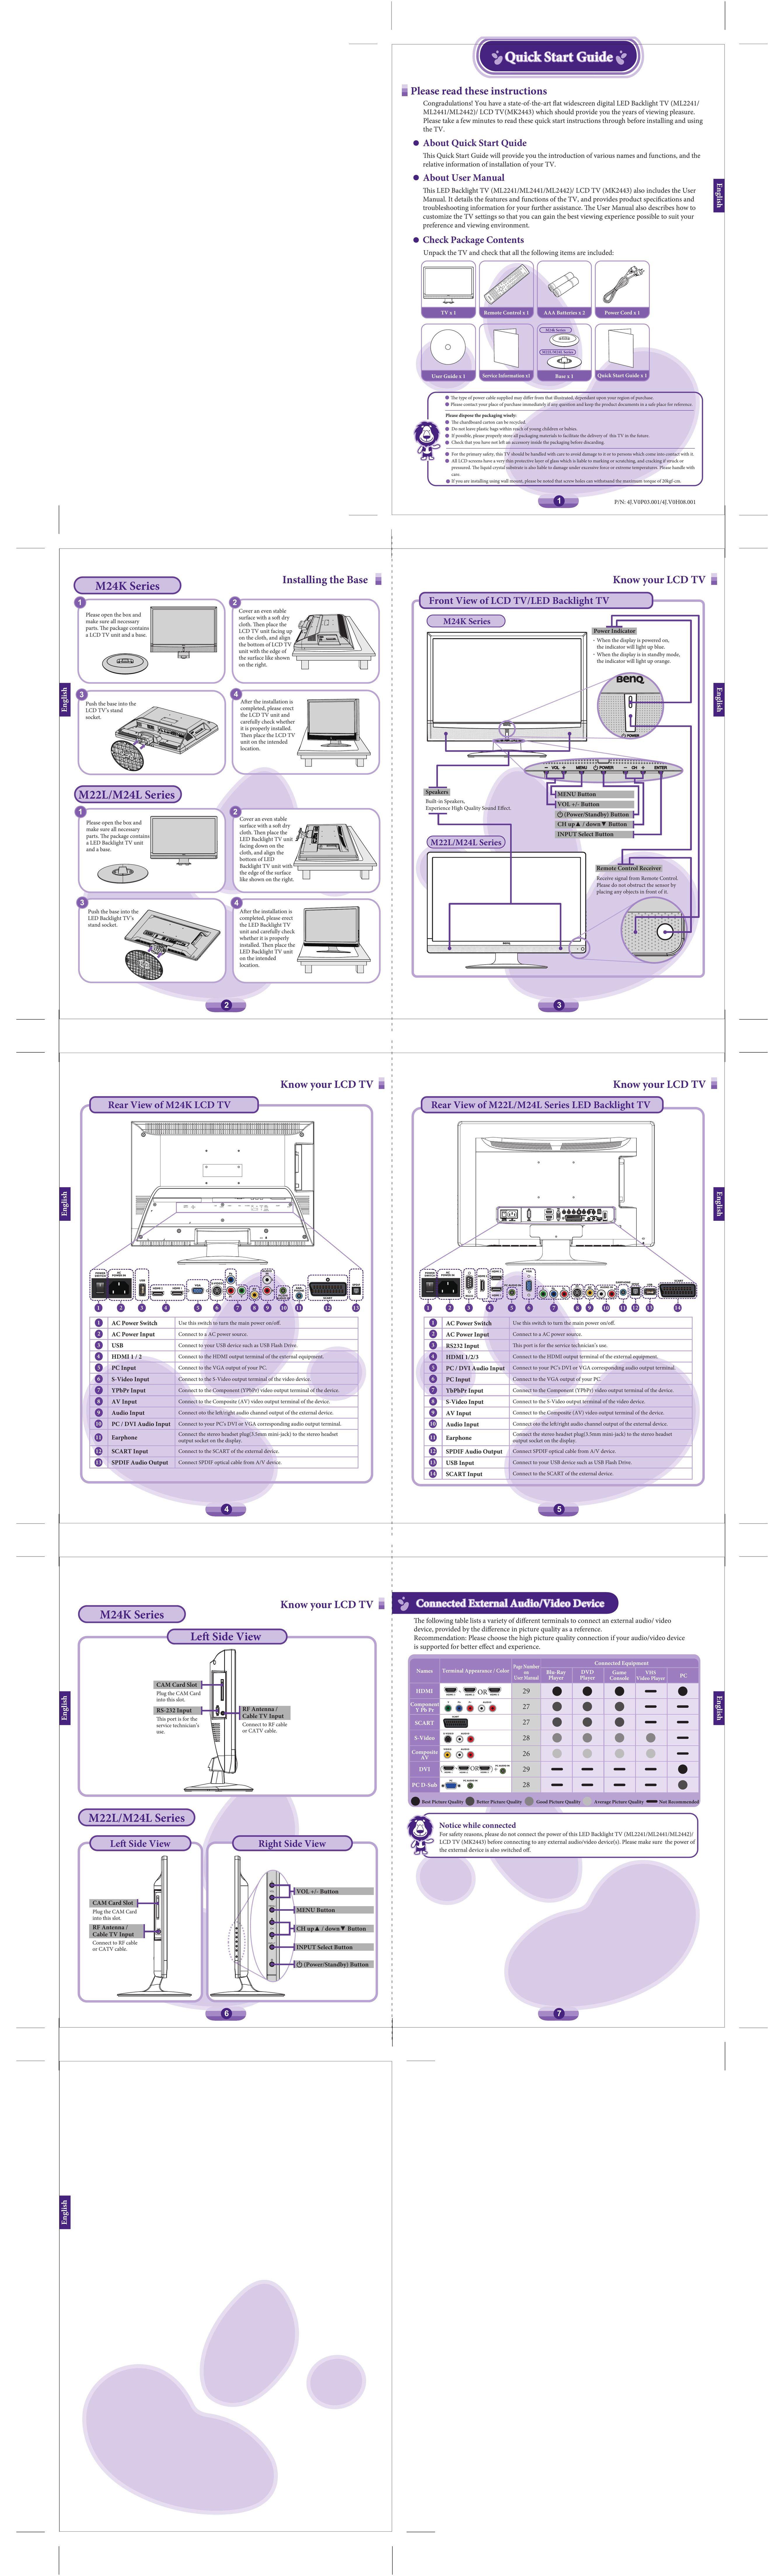 BenQ ML2441 Flat Panel Television User Manual